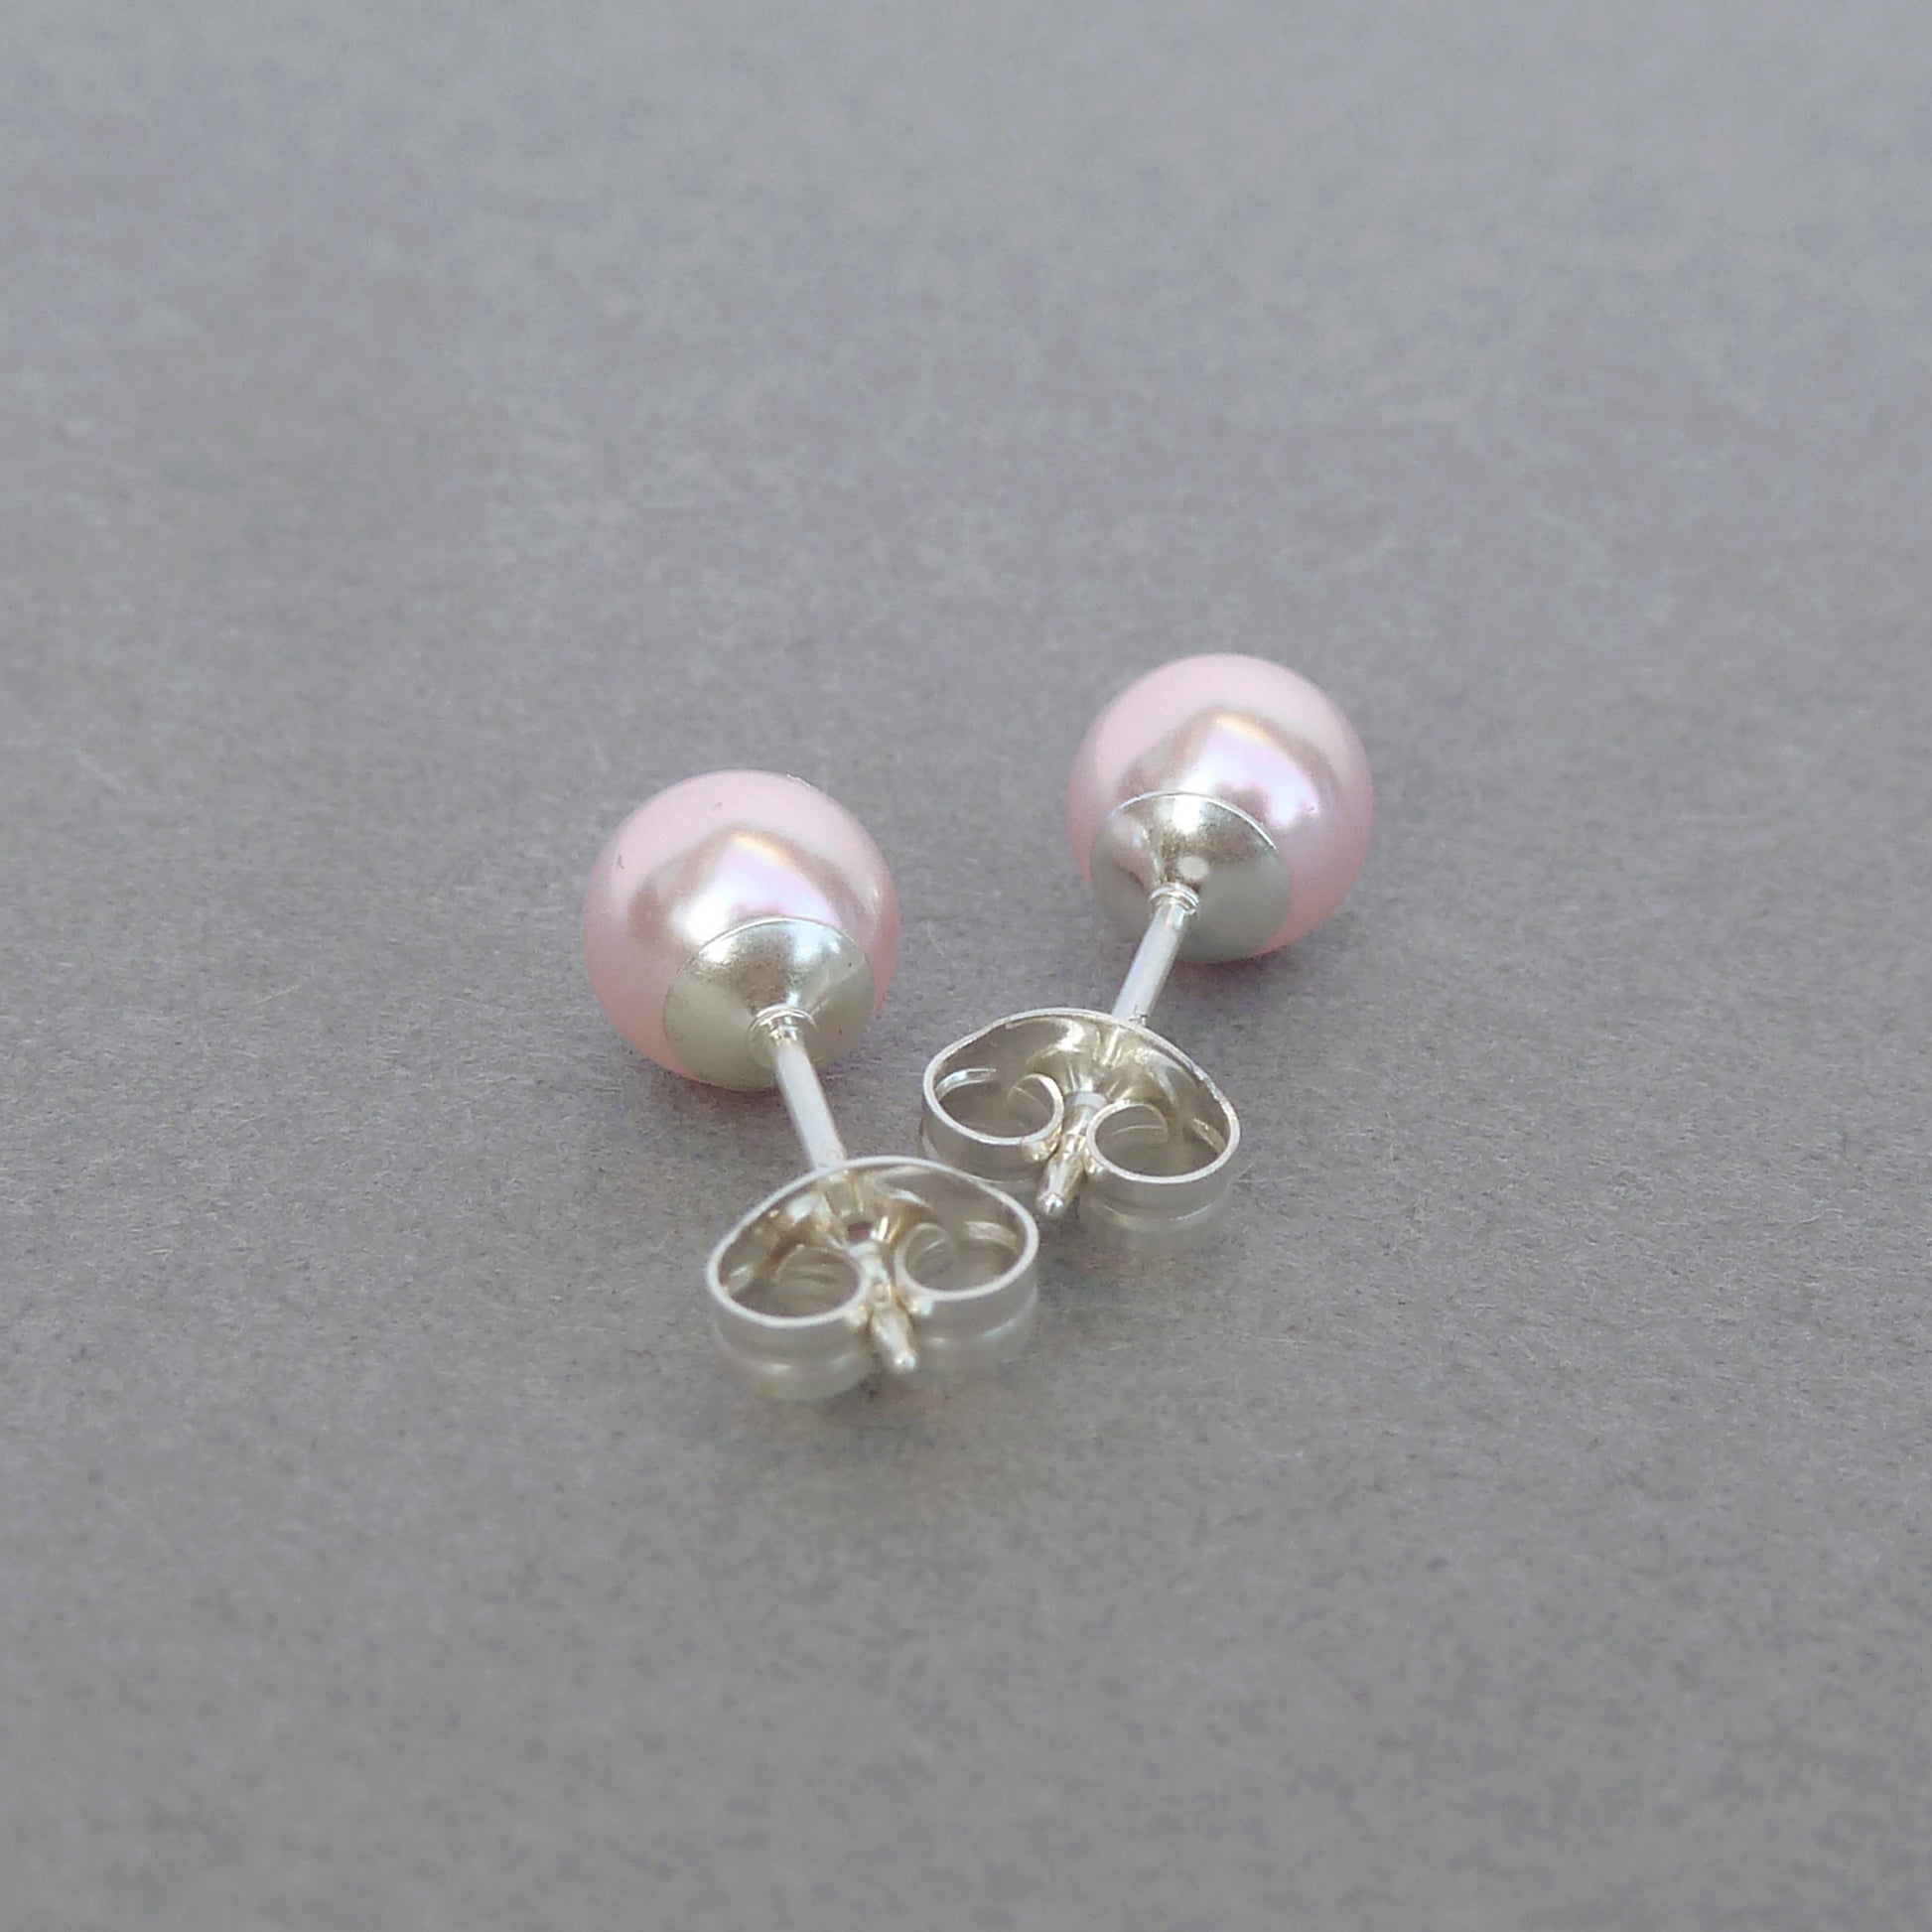 6mm blush pink pearl stud earrings